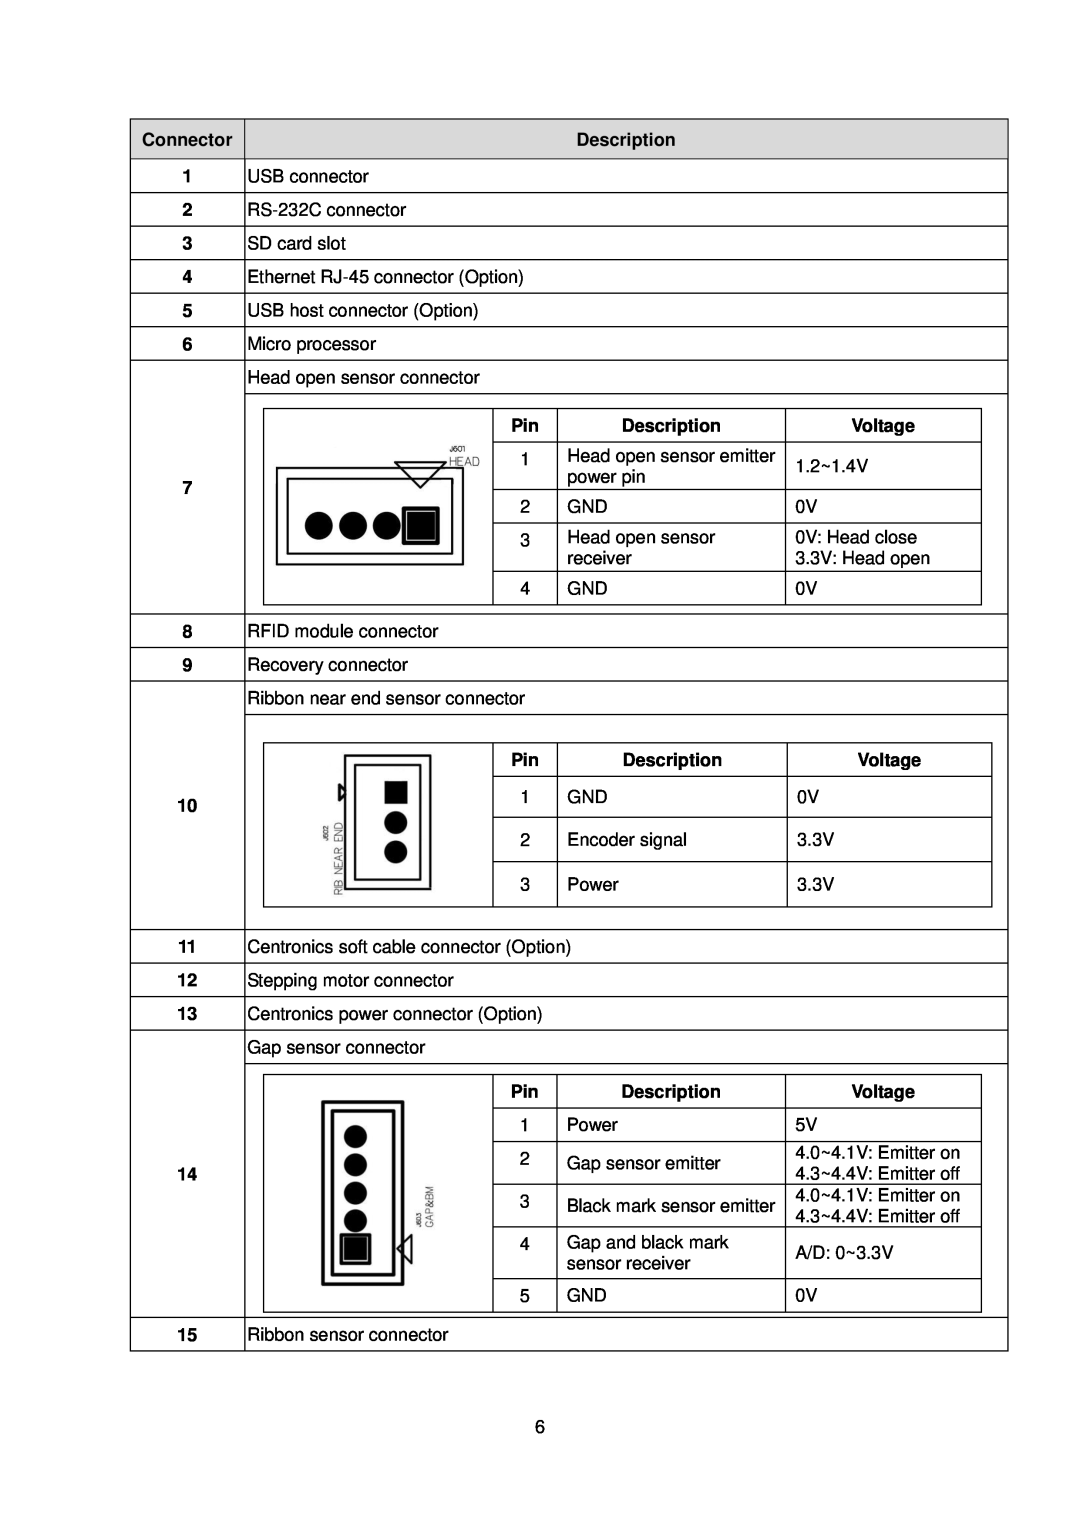 The Speaker Company me240 manual Connector, Description, Voltage 